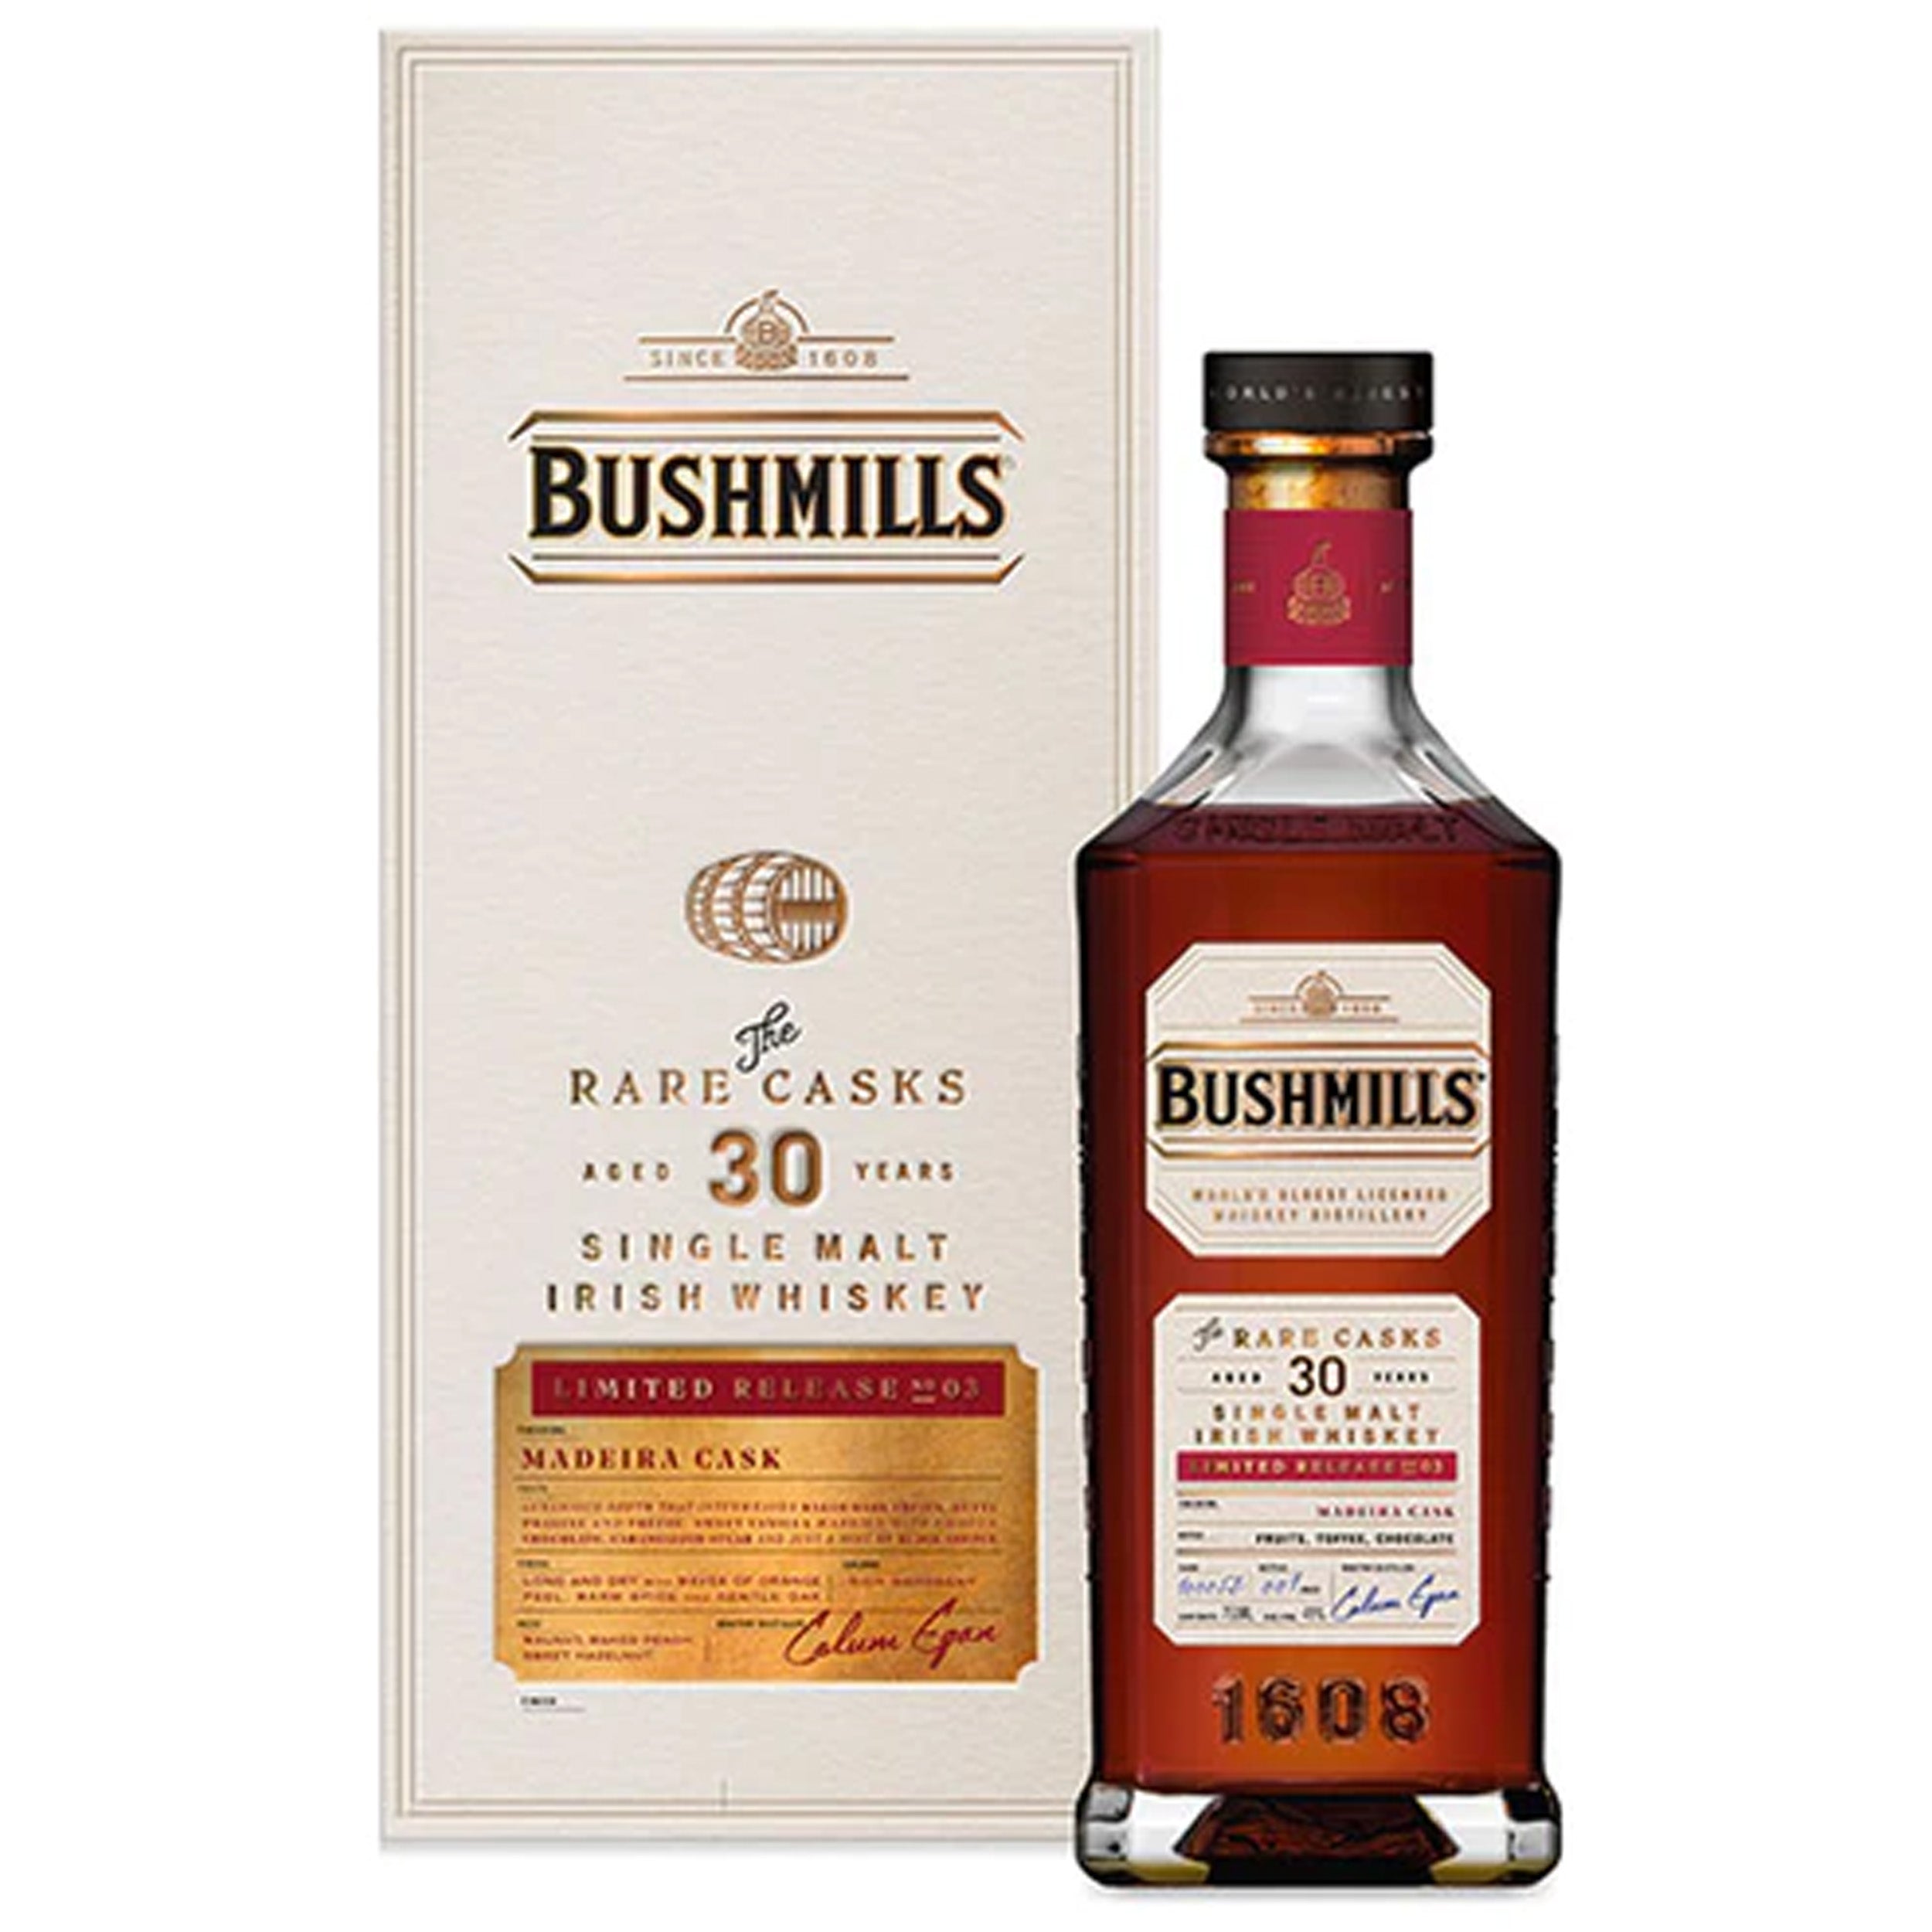 Bushmills The Rare Casks #3 30 Year Irish Whiskey